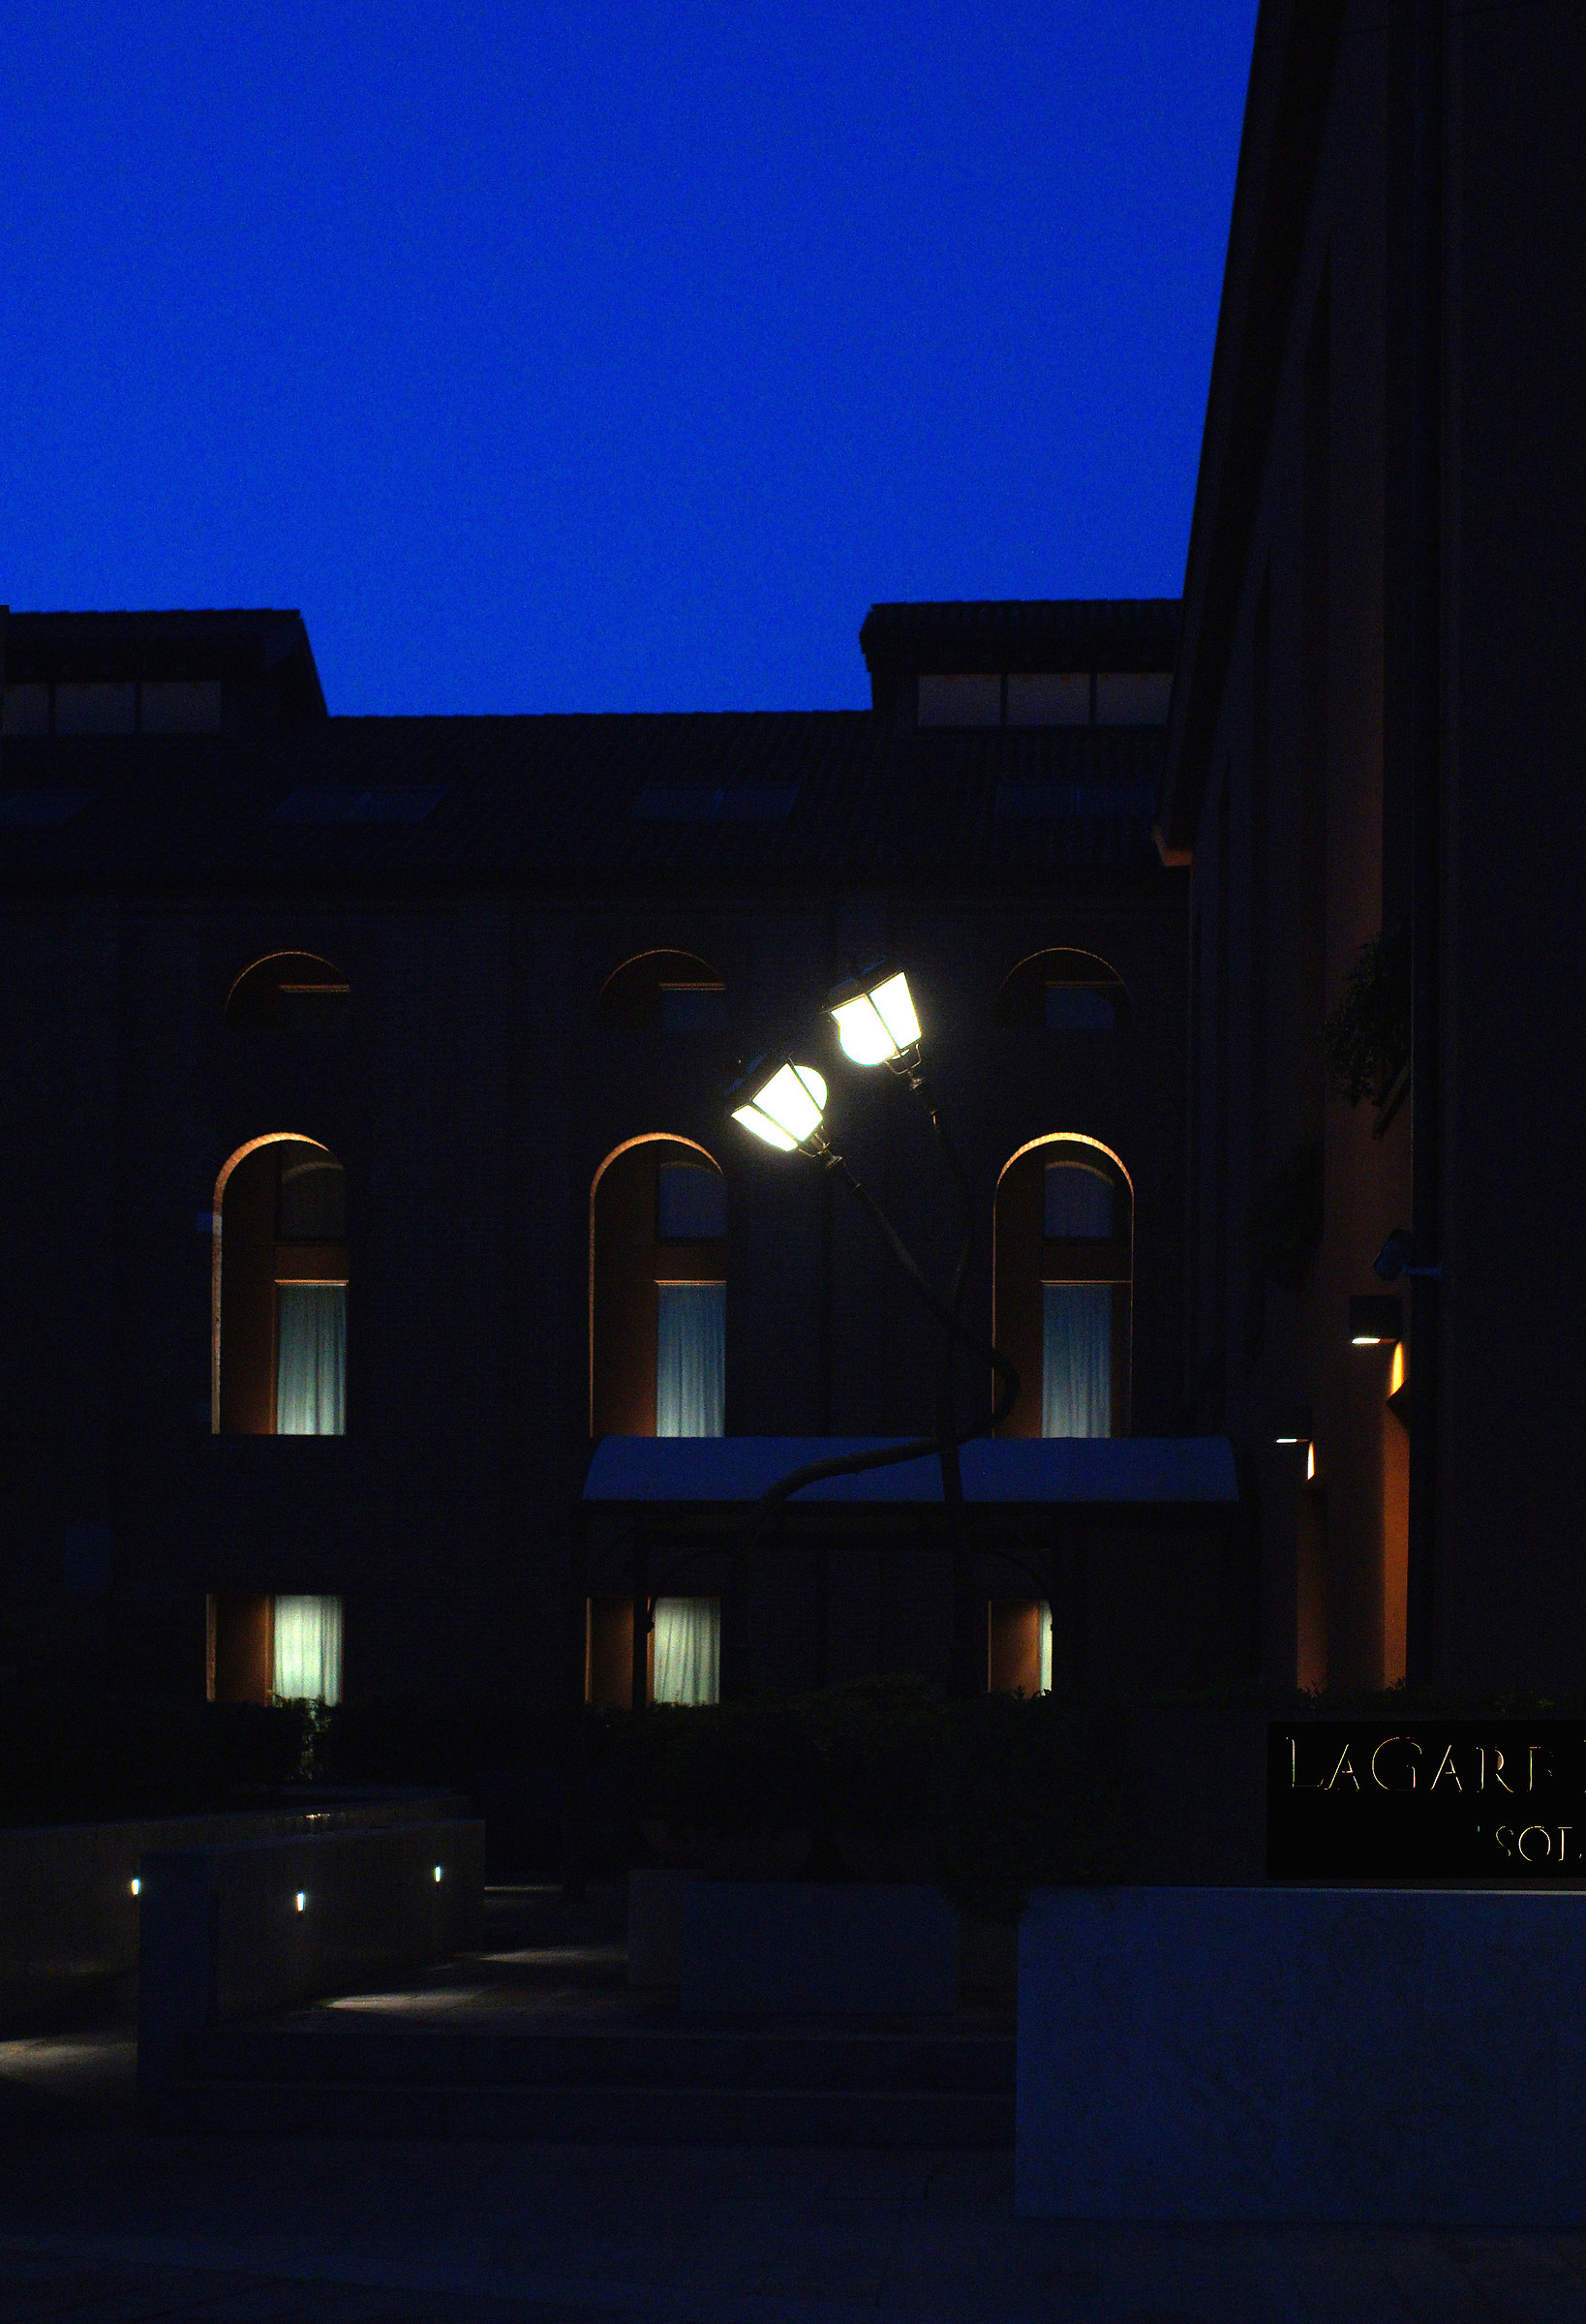 Two street lamps 'nnammurati' in the evening...